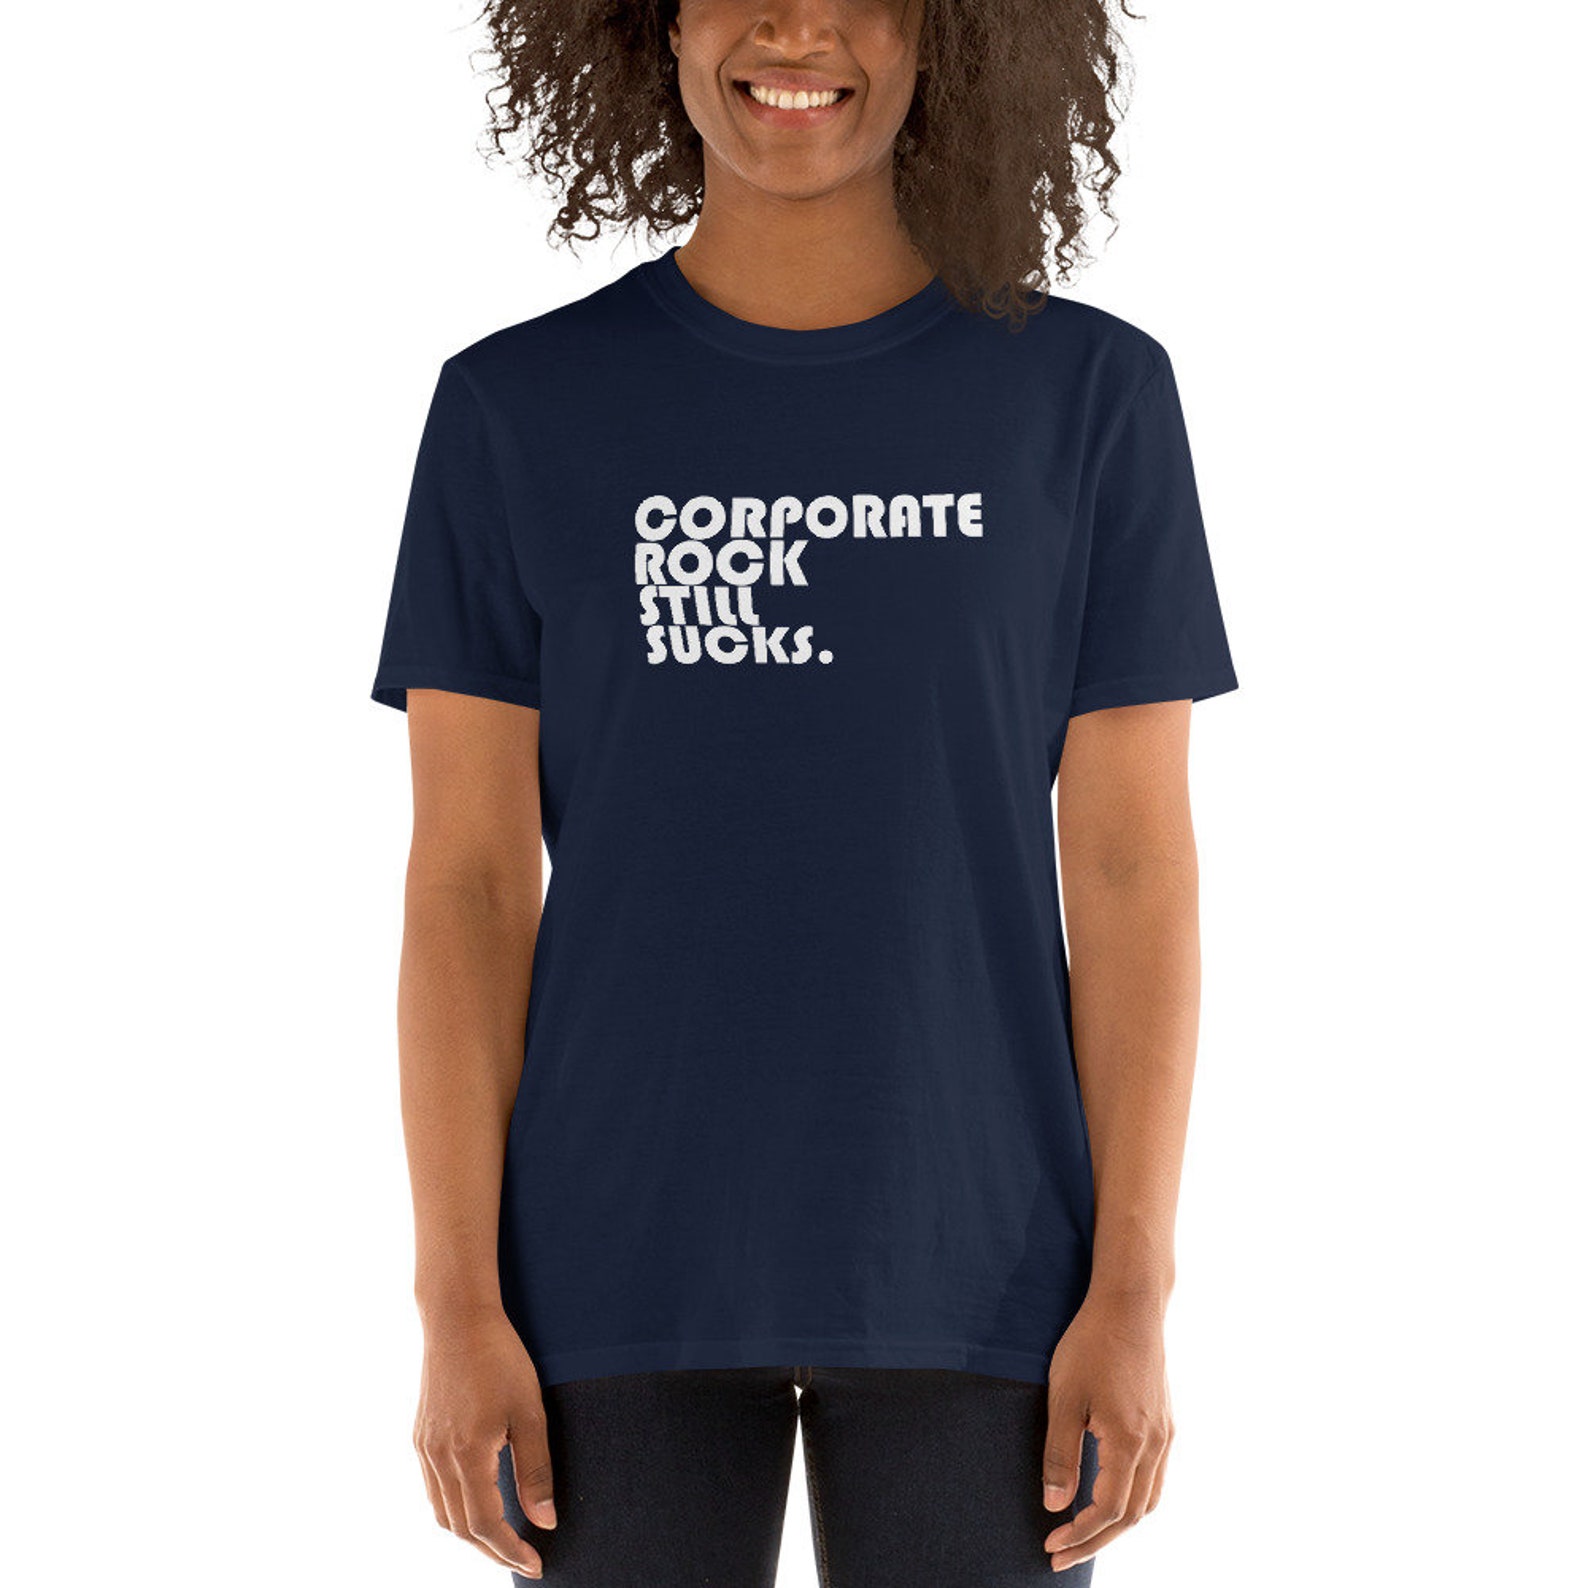 CORPORATE ROCK Still SUCKS: Mens/unisex Premium Fitted T-shirt - Etsy